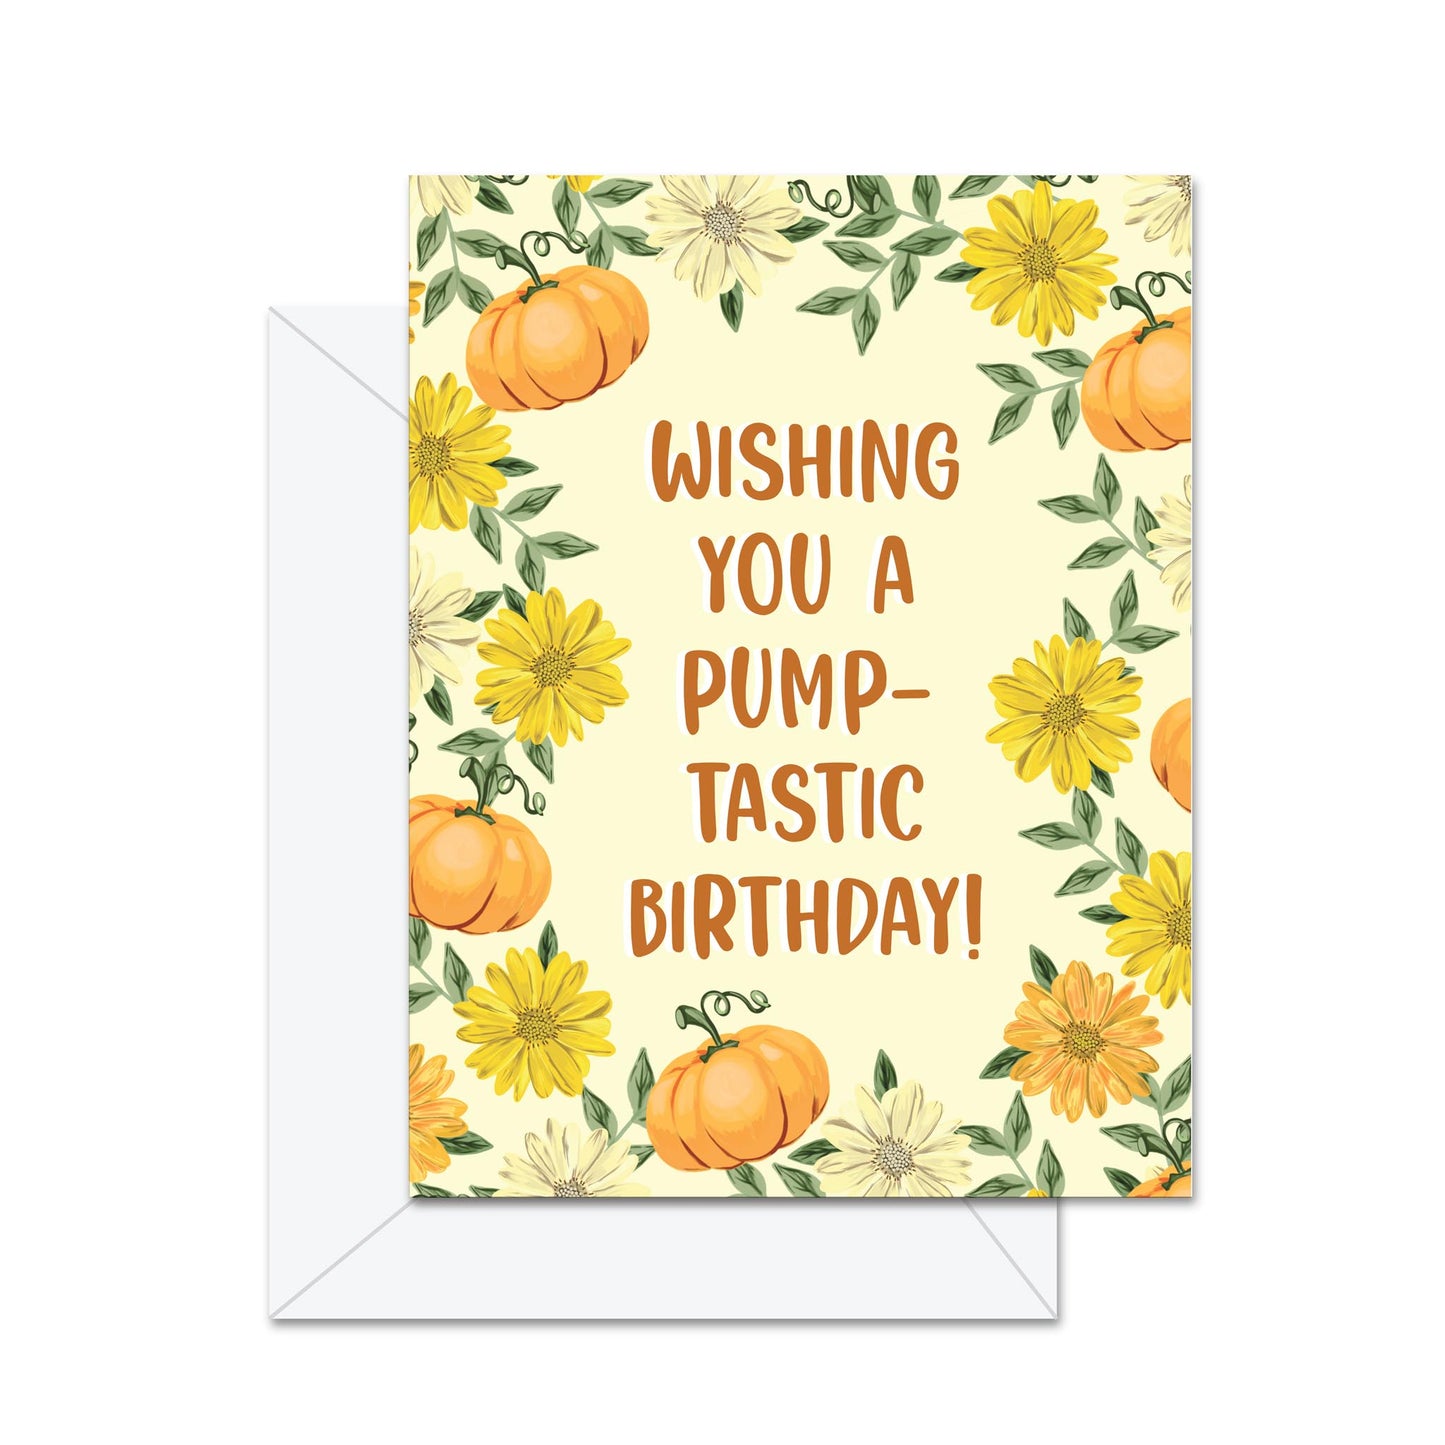 Wishing You A Pump-tastic Birthday! - Greeting Card